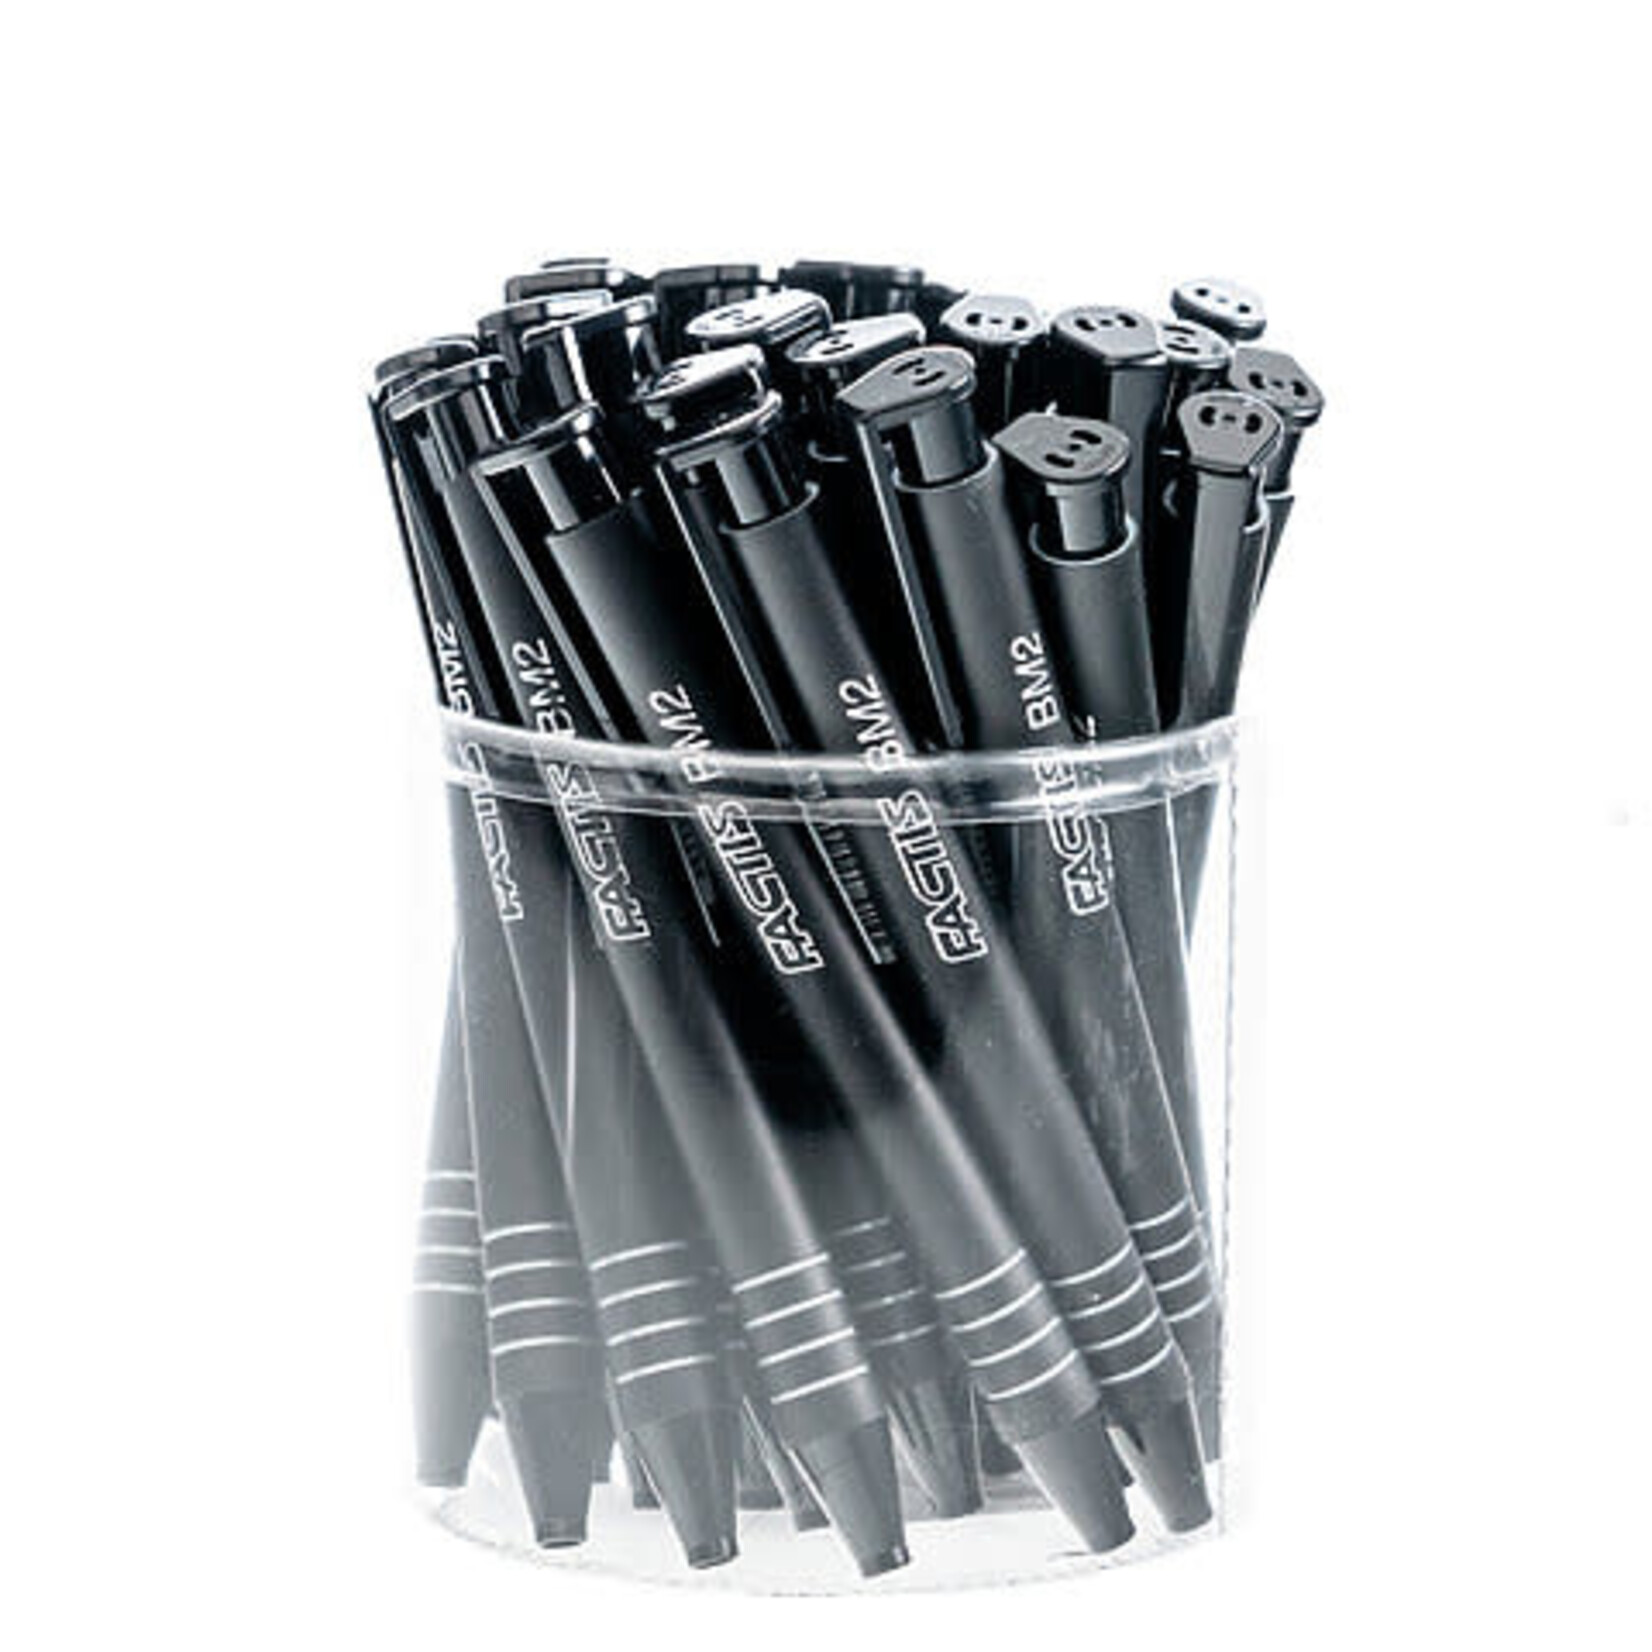 General Pencil Factis Pen Style Mechanical Eraser